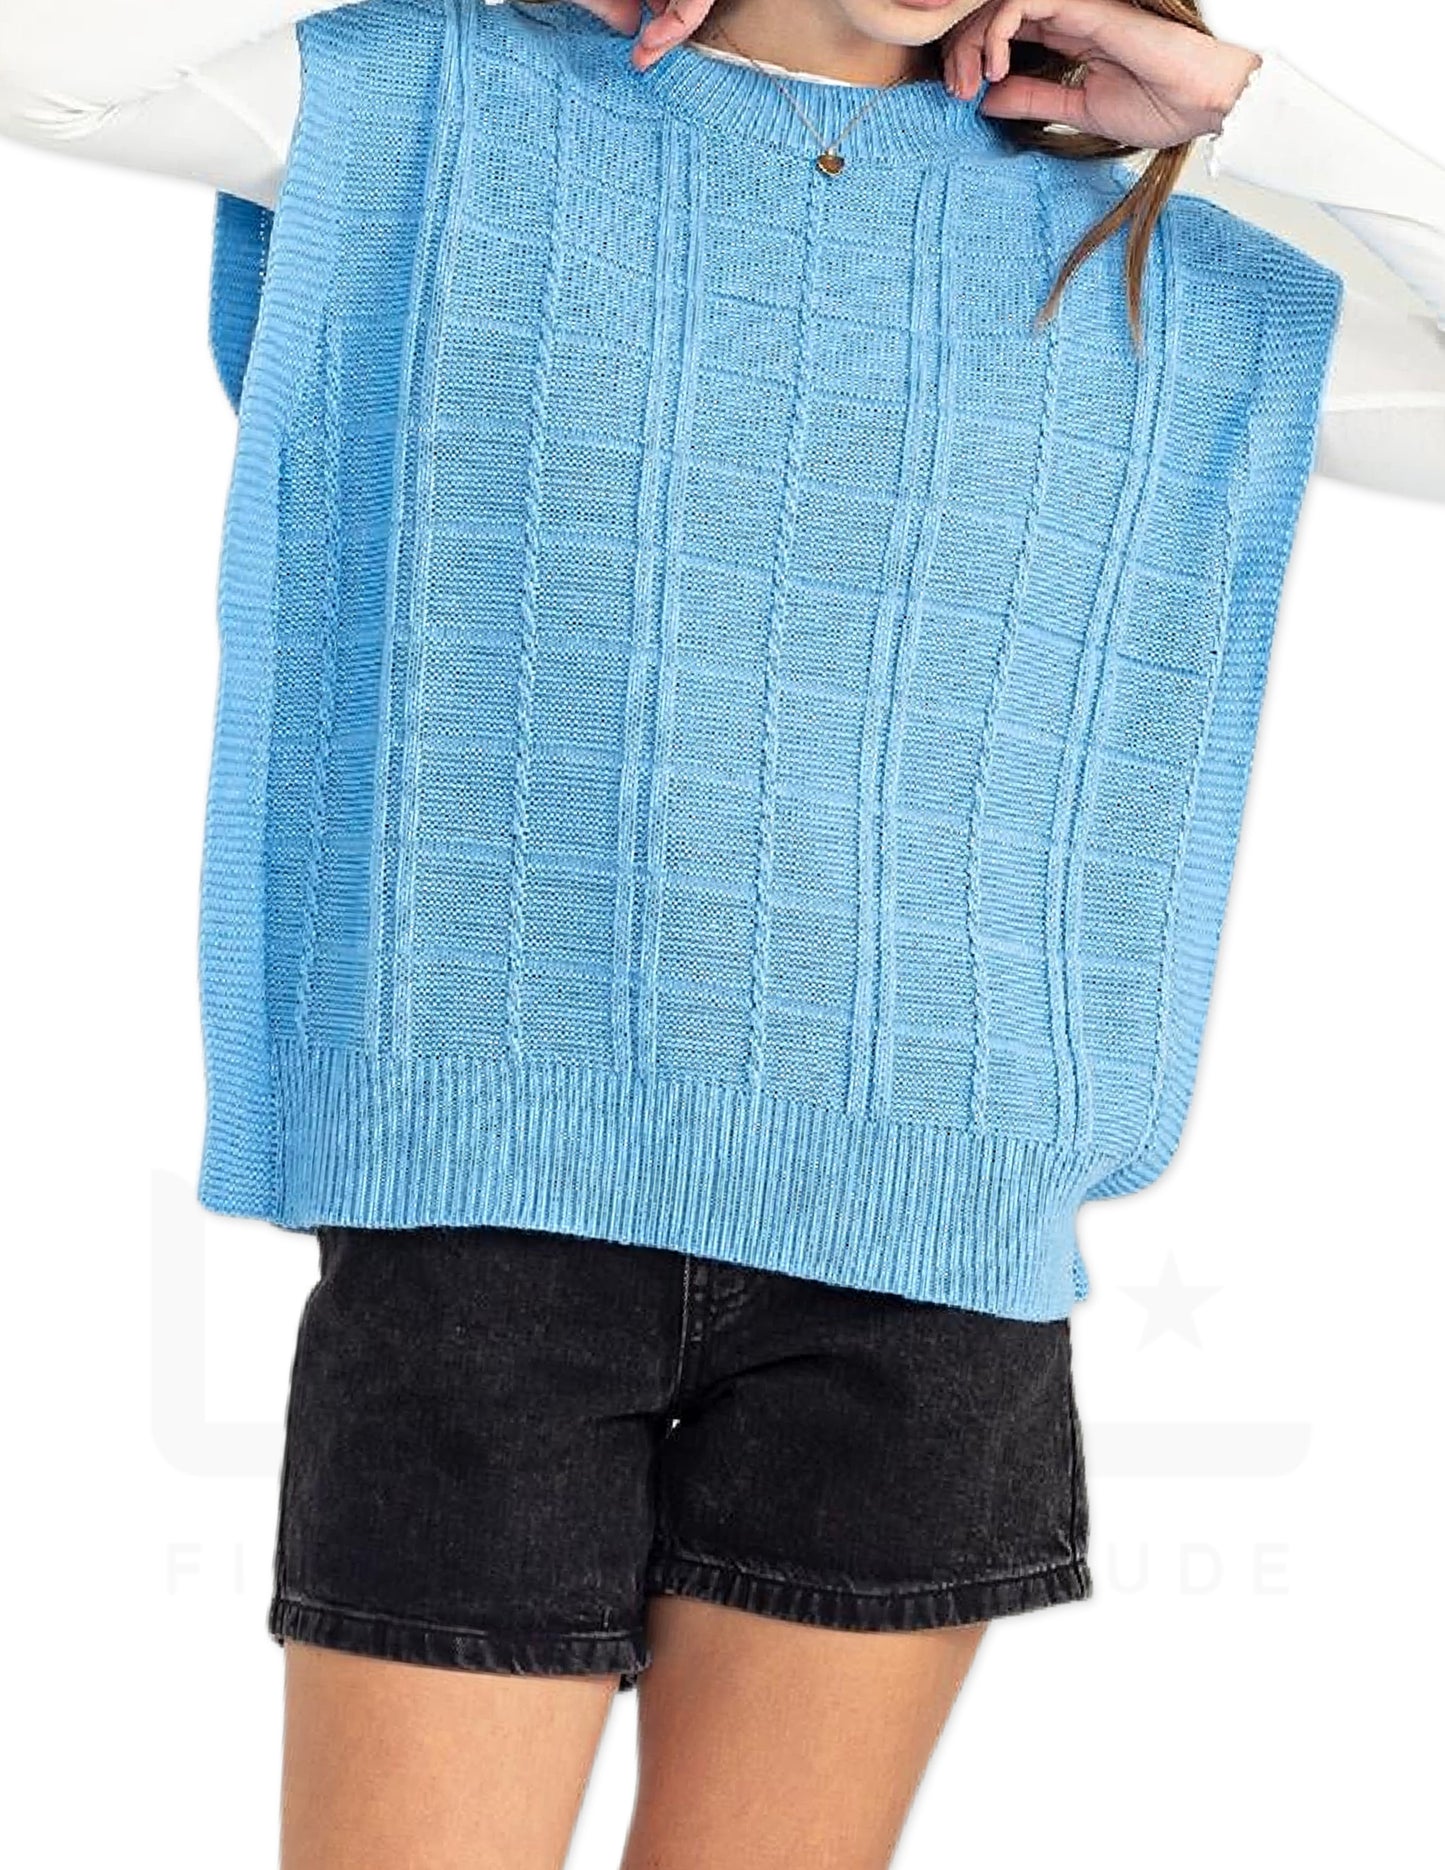 Sleeveless Oversized Cable Knit Sweater Vest - Medium Blue